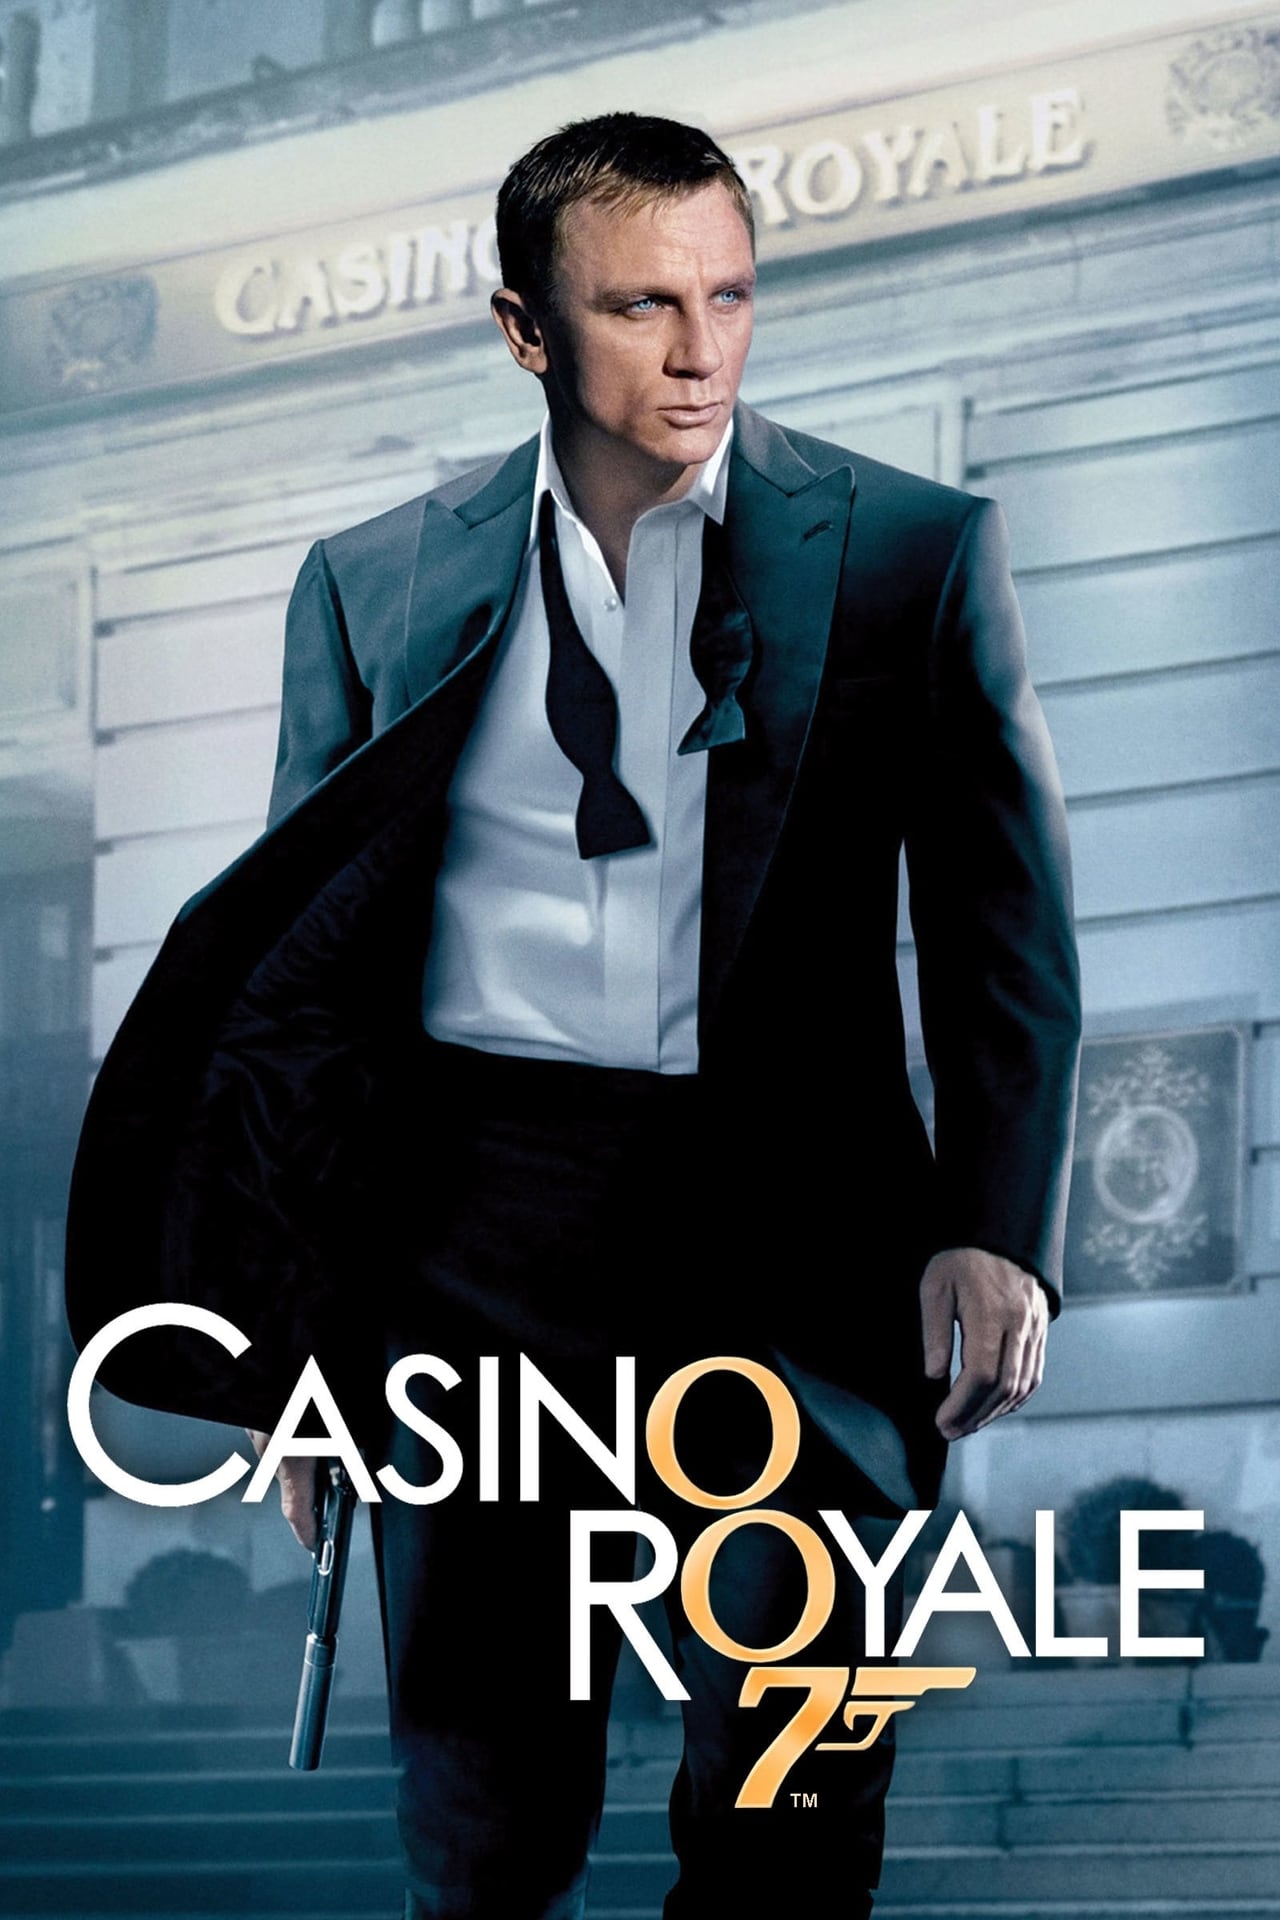  ver 007 casino royale espaГ±ol latino online 